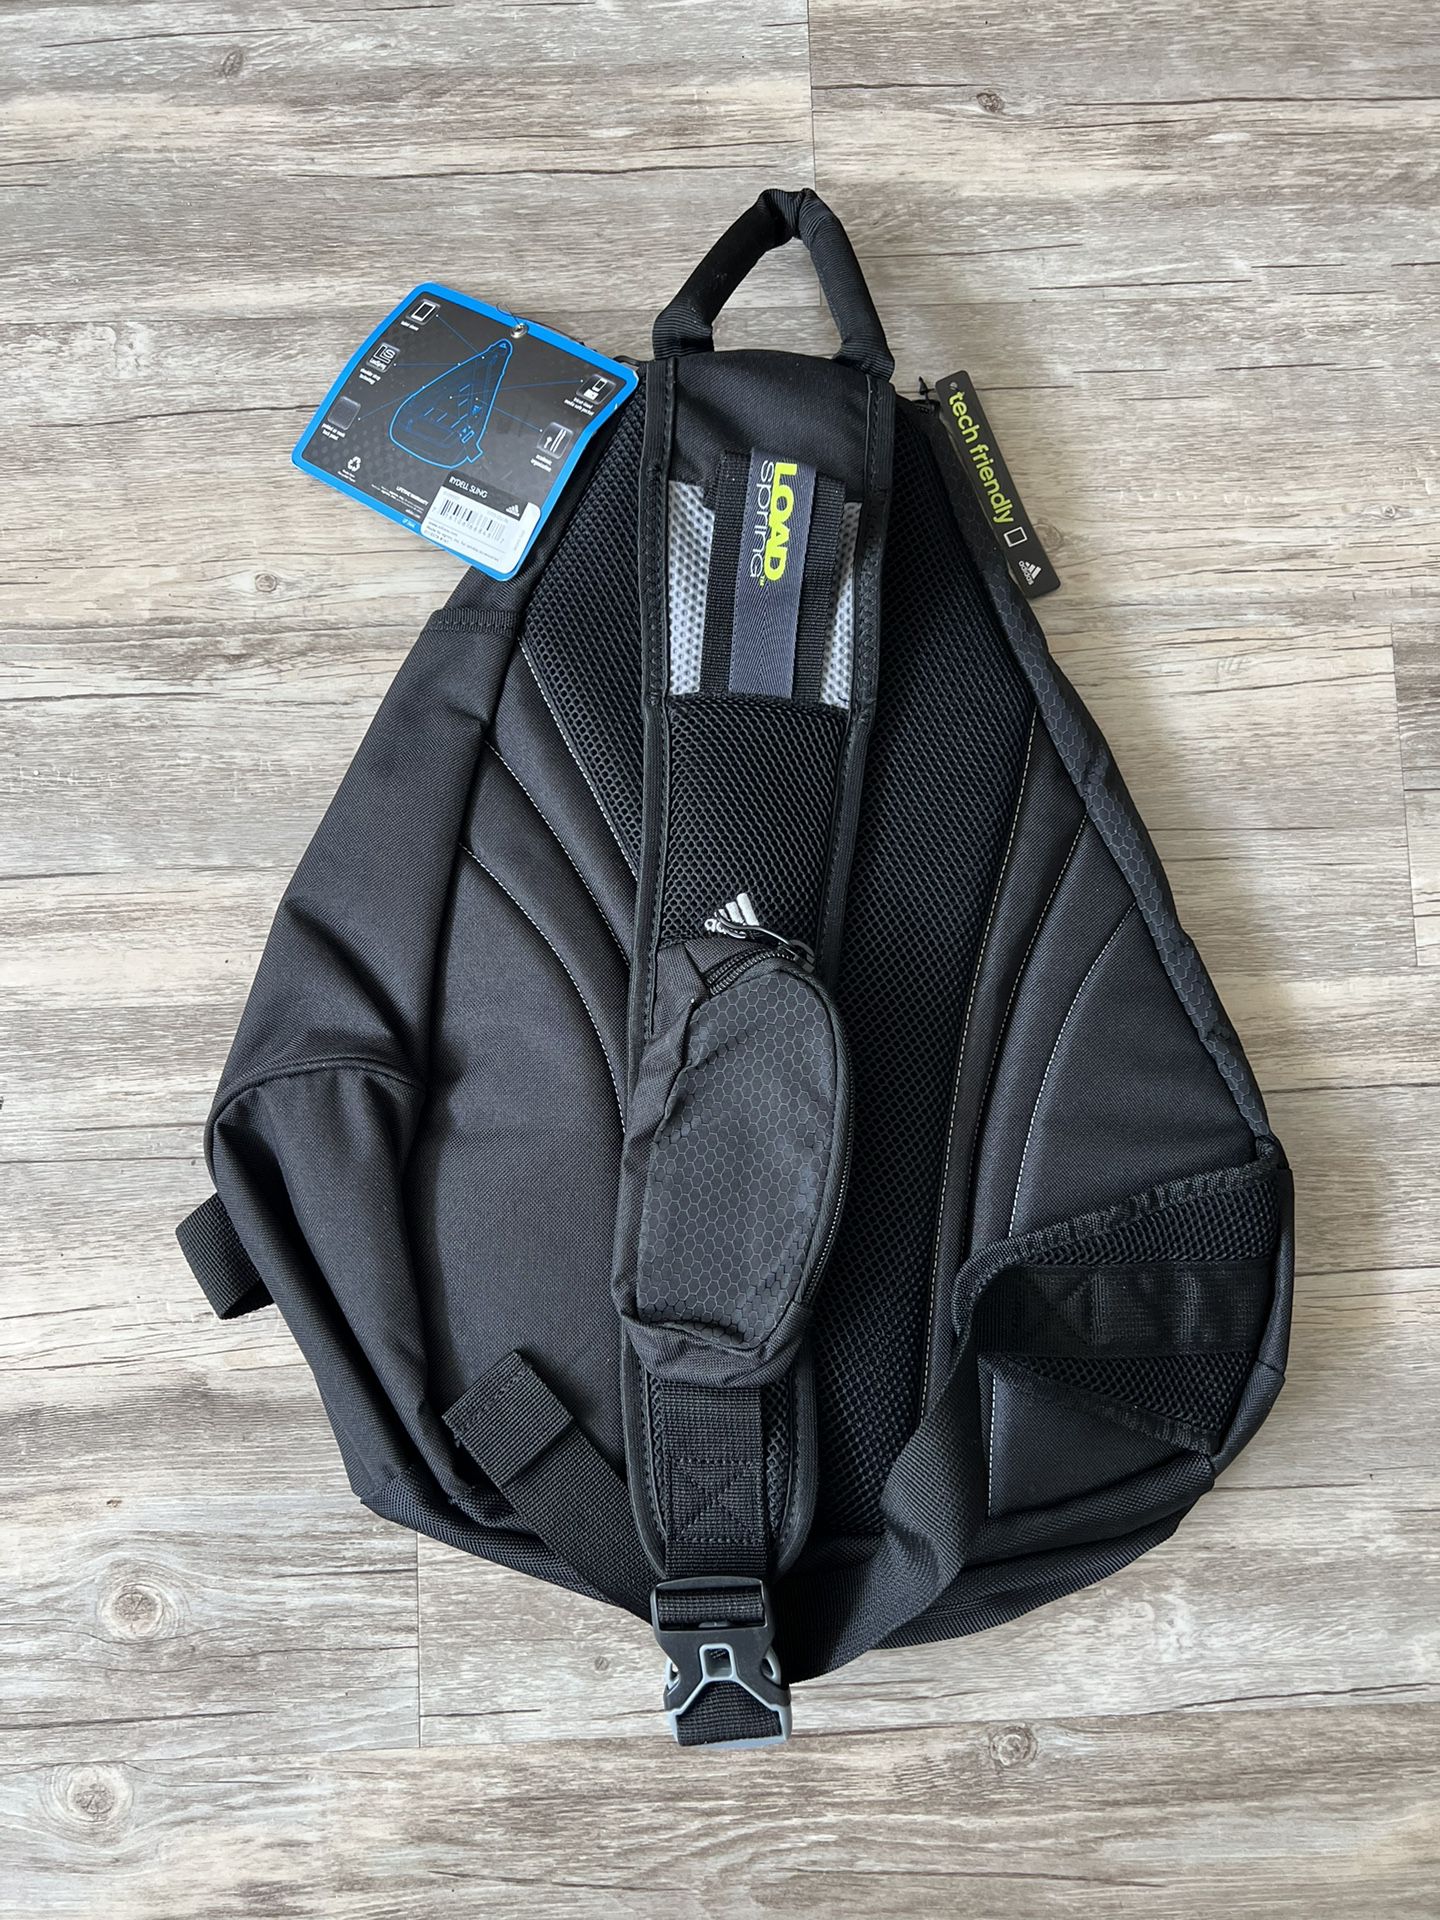 monigote de nieve Groseramente Gorrión Adidas Rydell Sling Bag Backpack for Sale in Sumner, WA - OfferUp